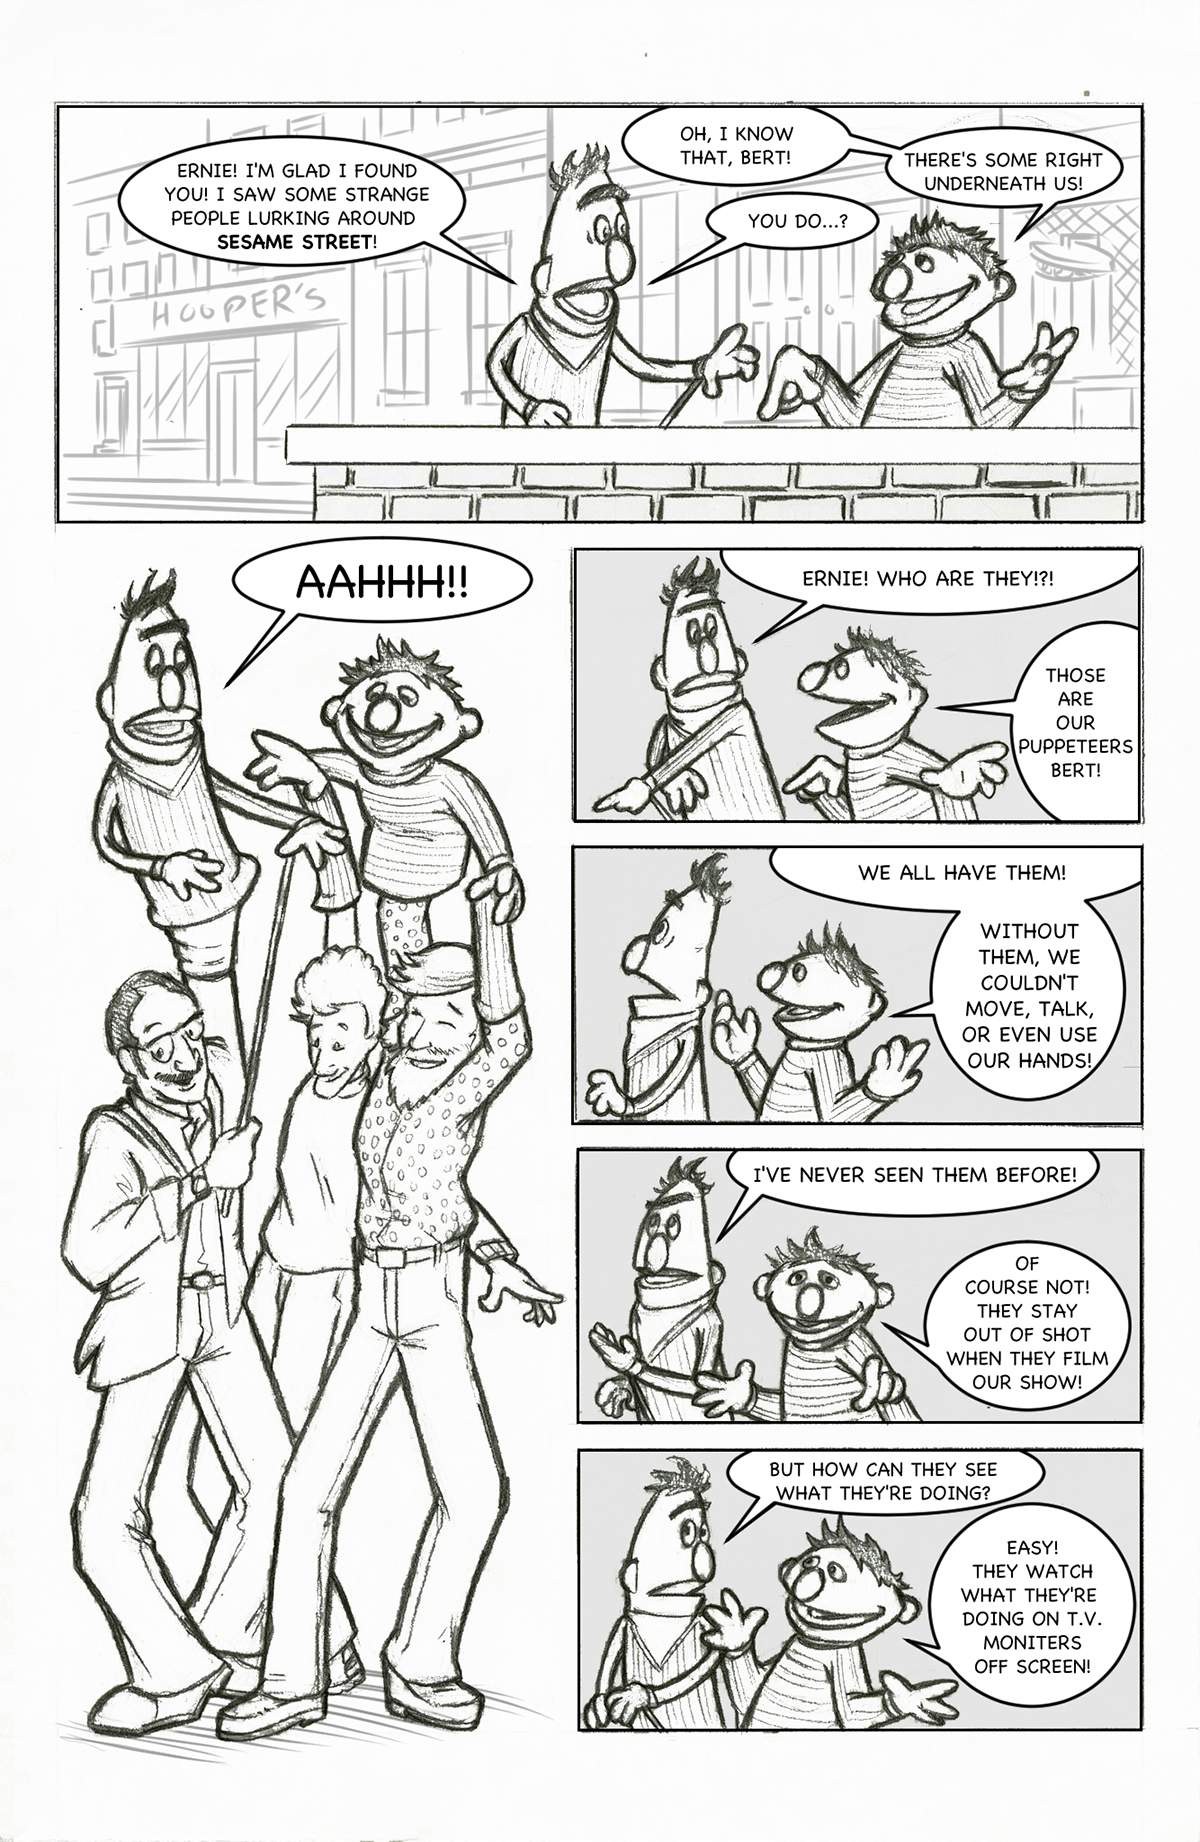 Jim Henson puppetry Muppets educational pencils comic